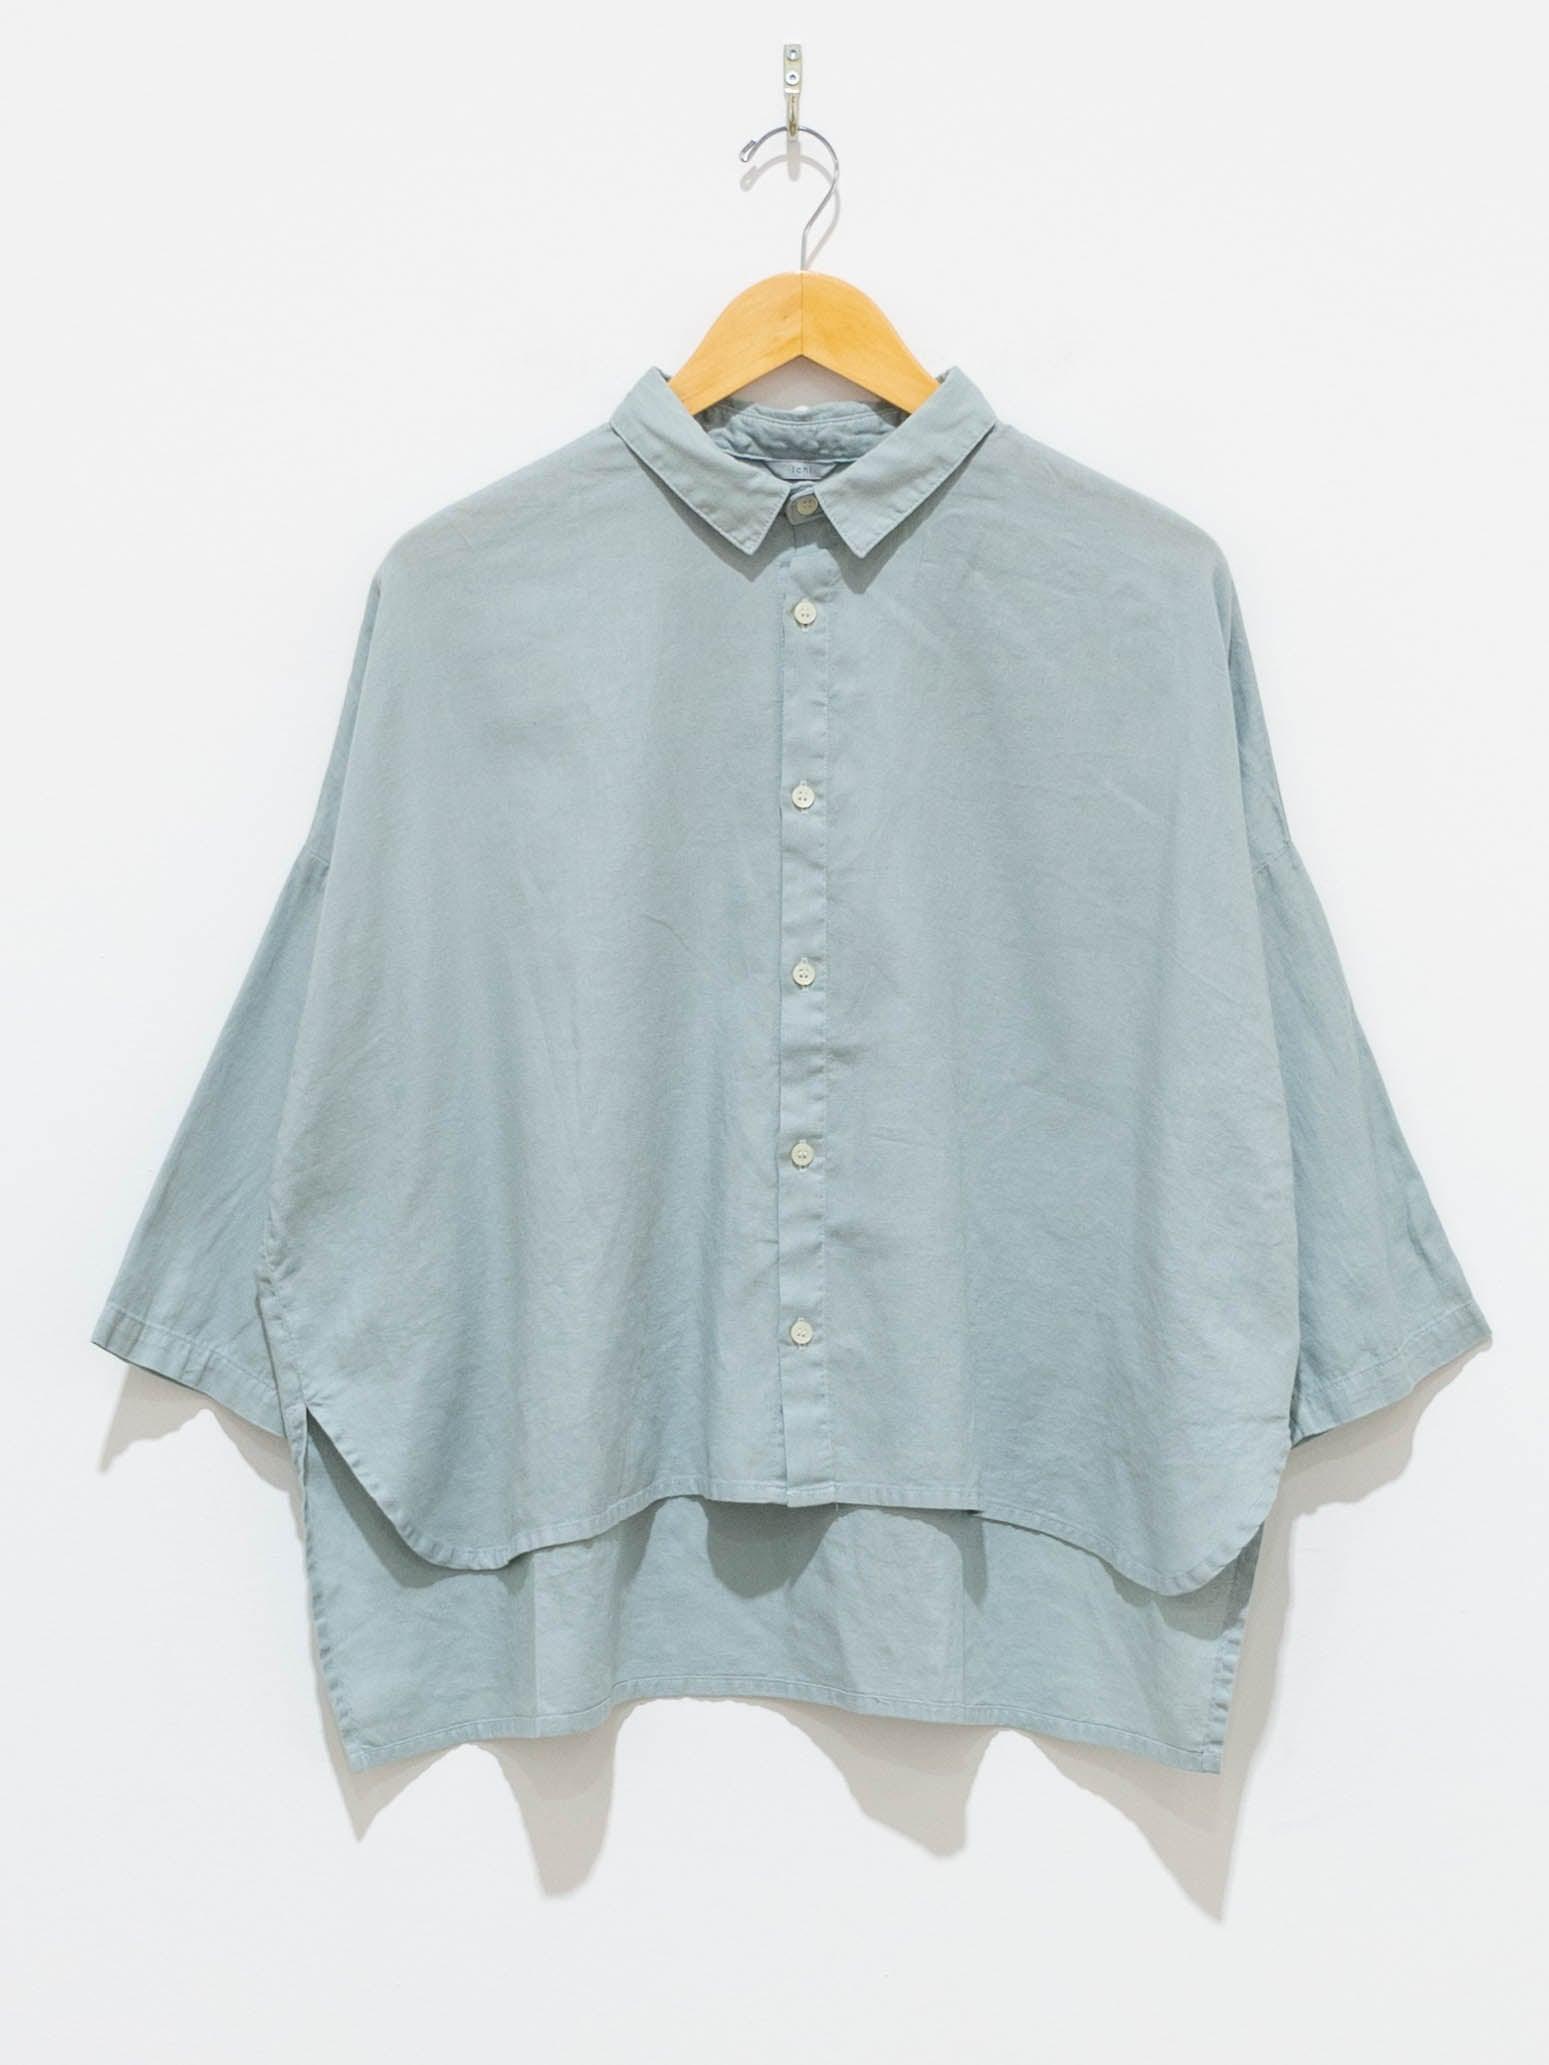 Namu Shop - Ichi Antiquites Co/Li BD Shirt - Mint Blue